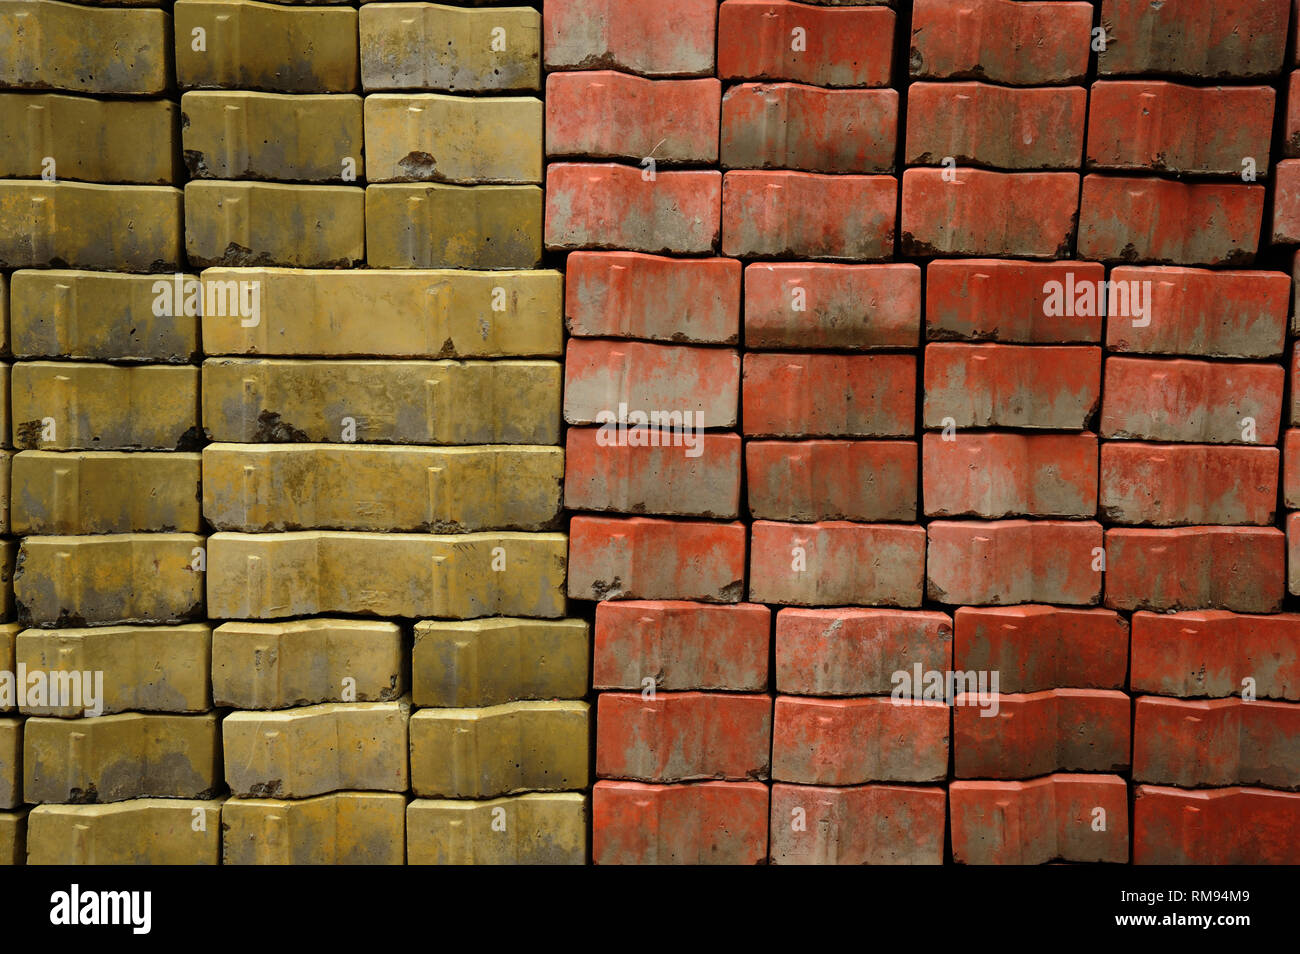 Interlocking concrete Paver Block bricks, India, Asia Stock Photo